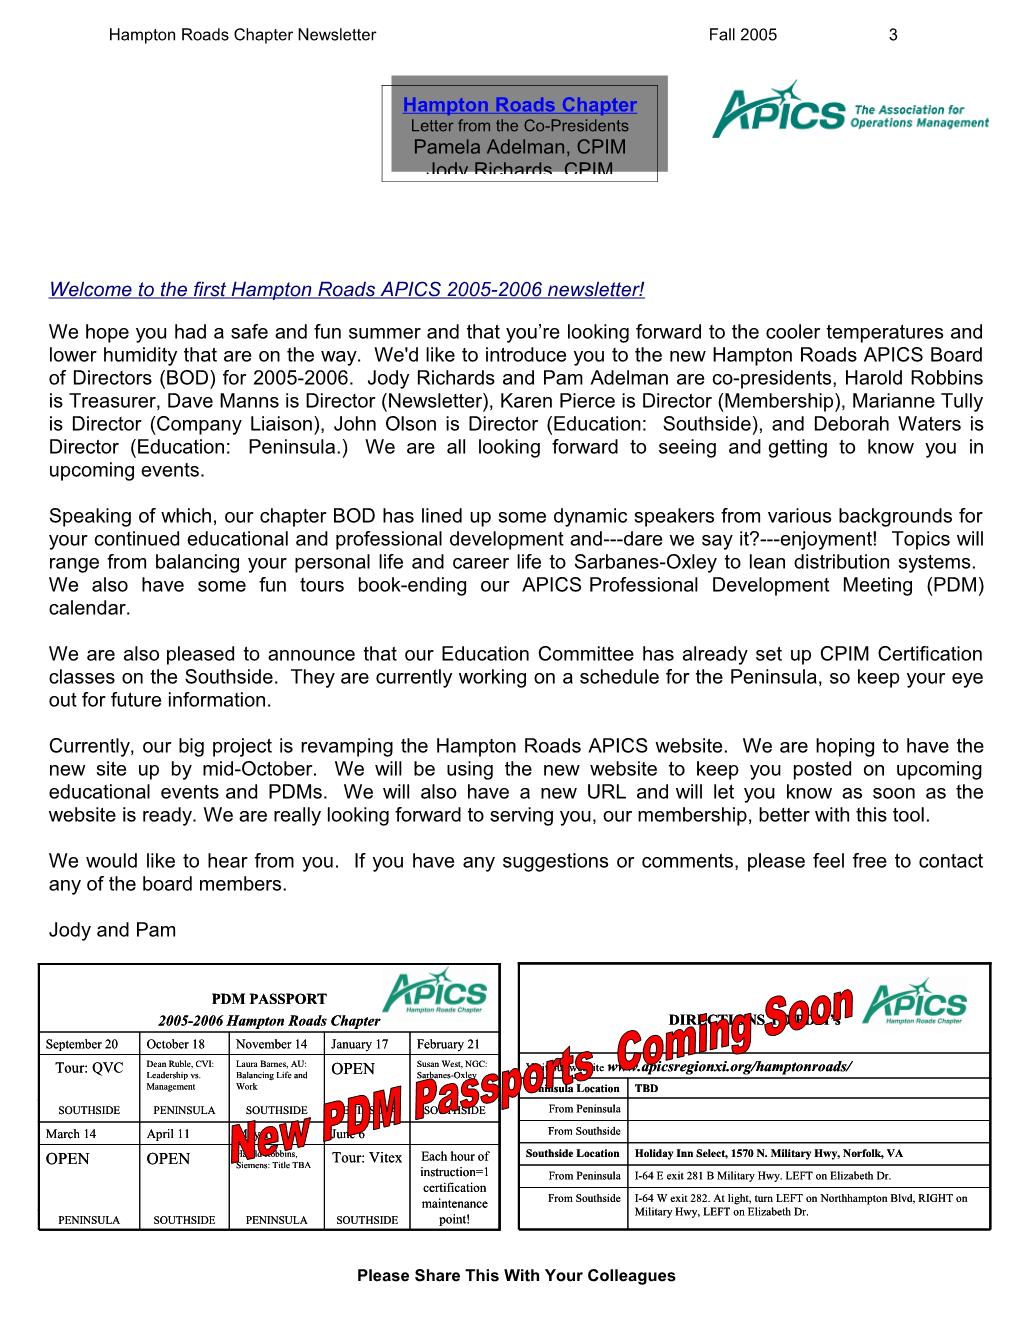 Hampton Roads Fall 2004 APICS Newsletter